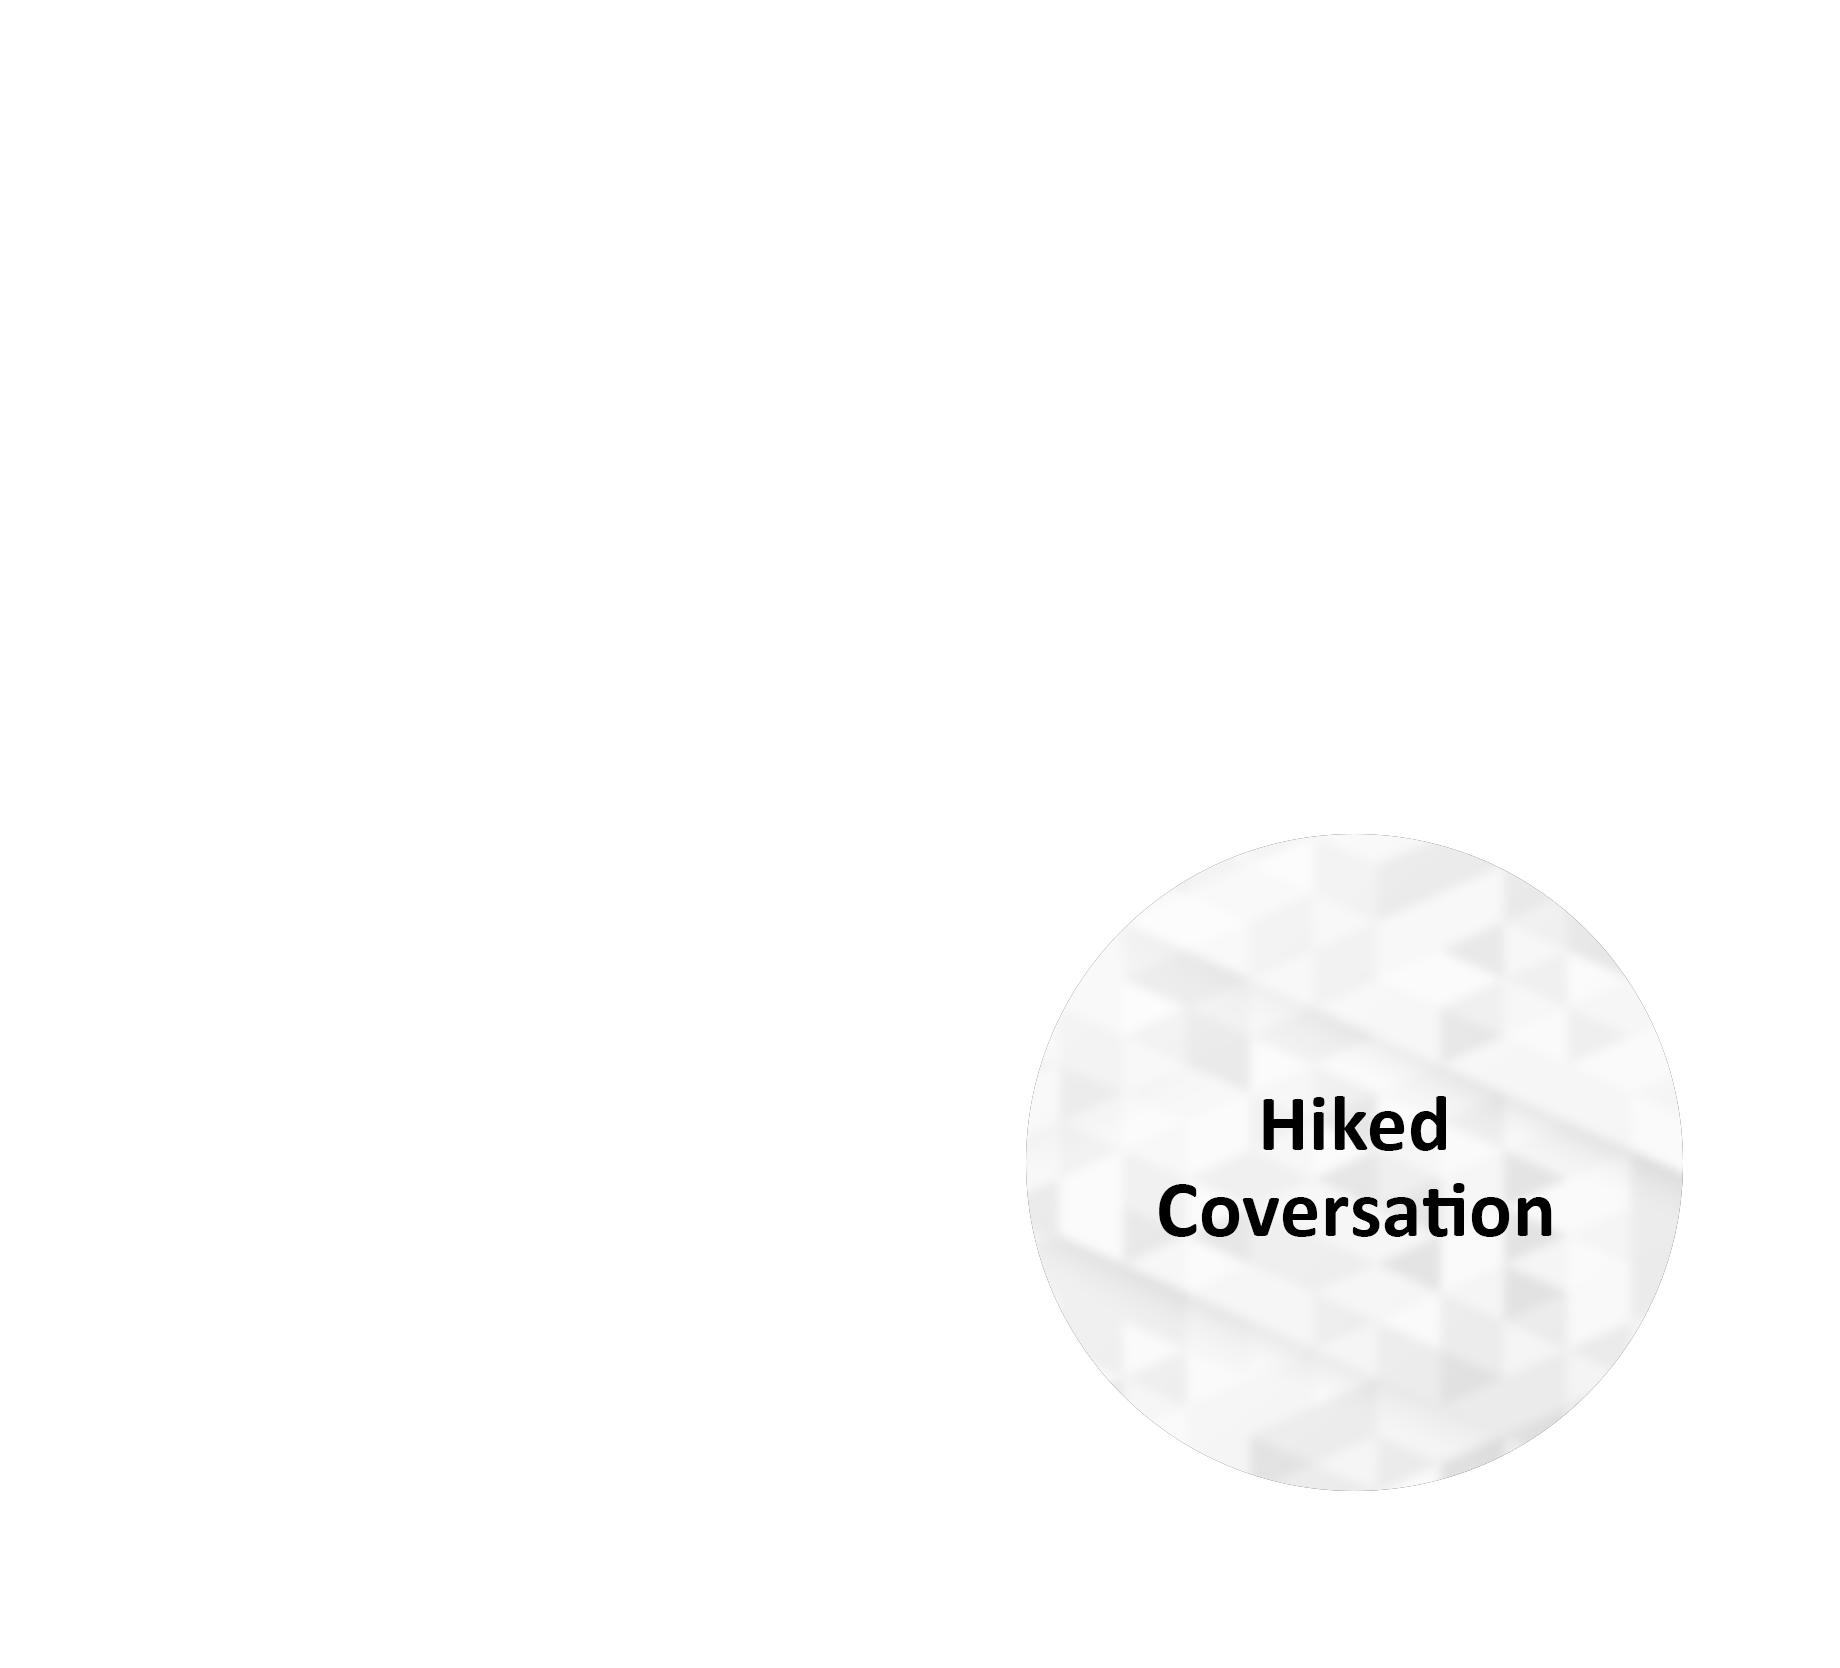 hiked-conversation